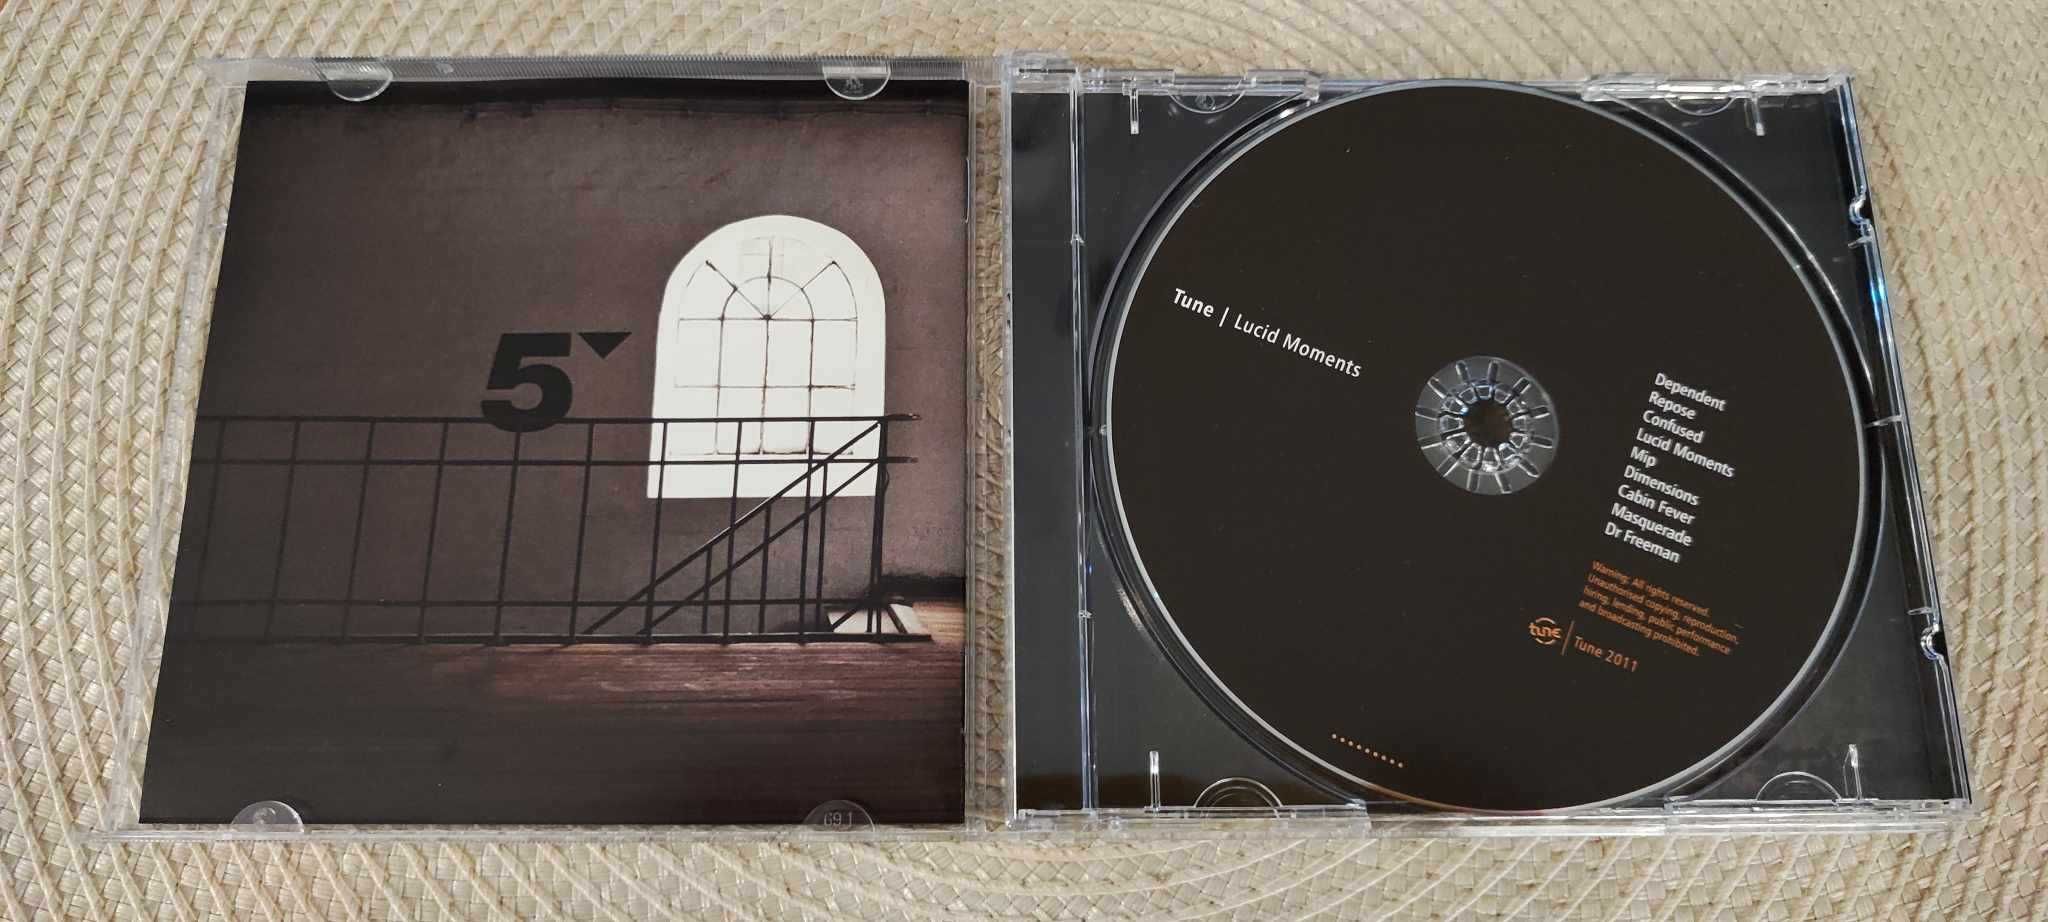 Tune - Lucid Moments CD.2011. Wyprzedaż CD